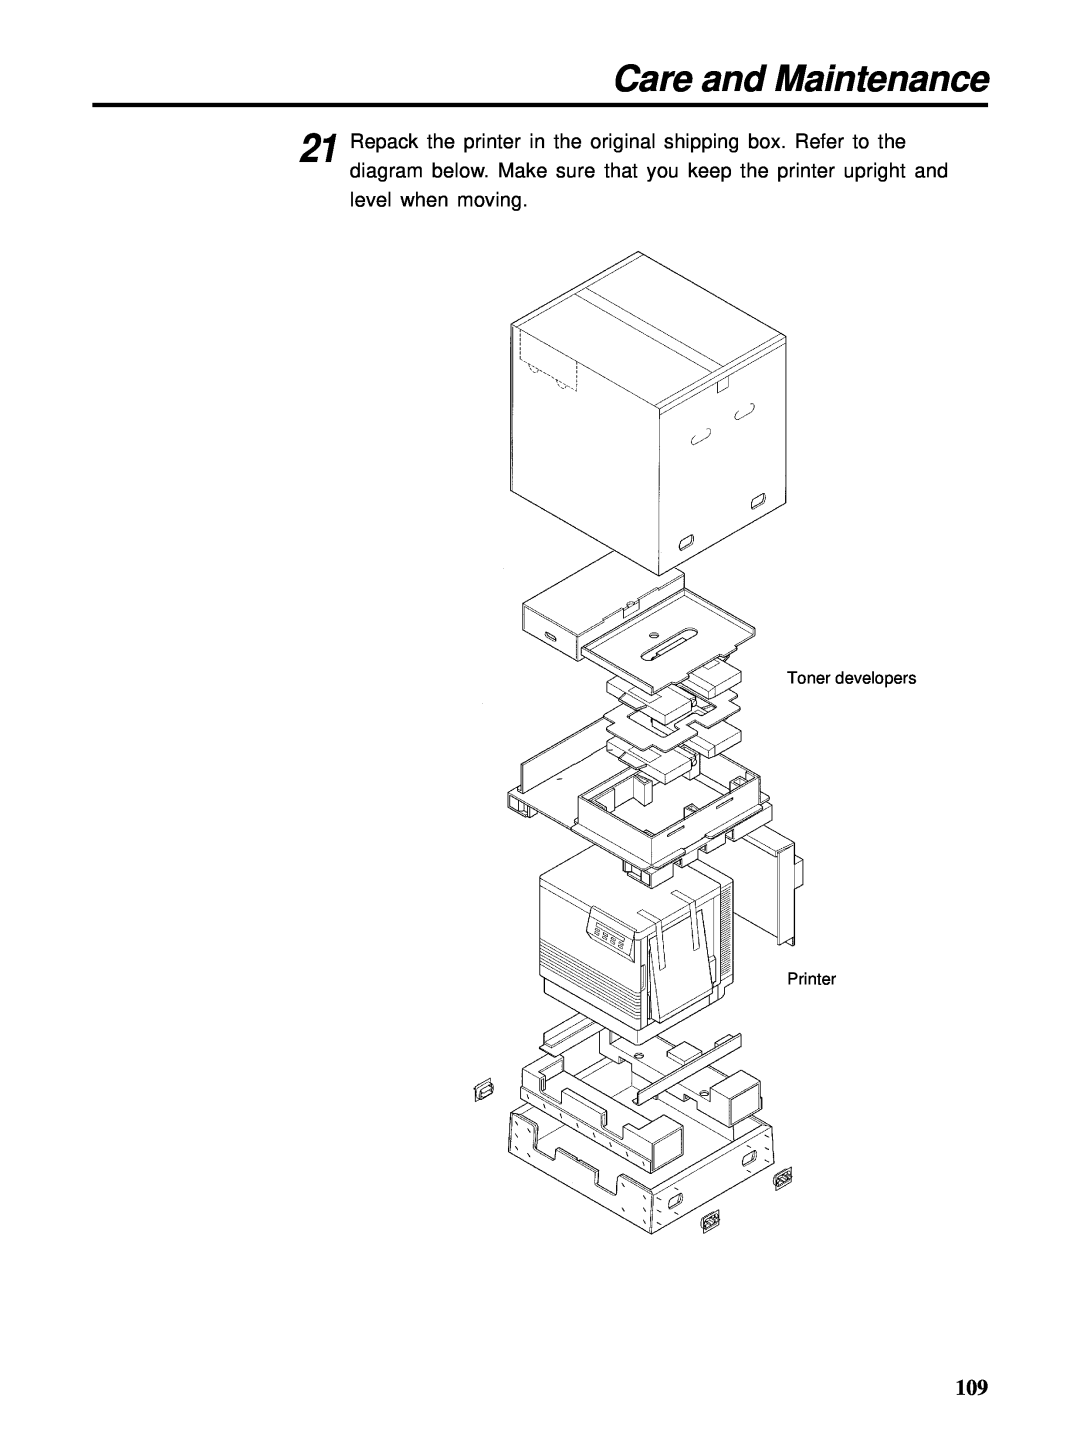 HP Ci 1100 manual Care and Maintenance, Toner developers Printer 